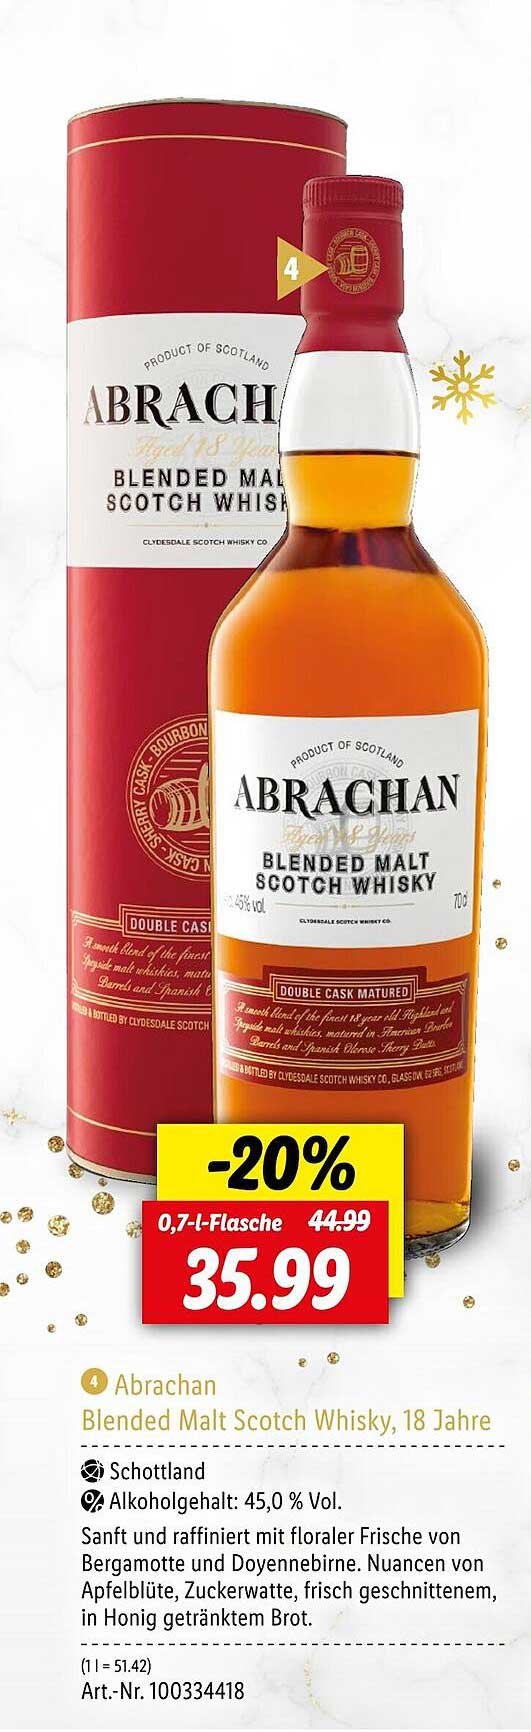 Lidl Scotch Jahre Abrachan 18 bei Whisky, Angebot Malt Blended